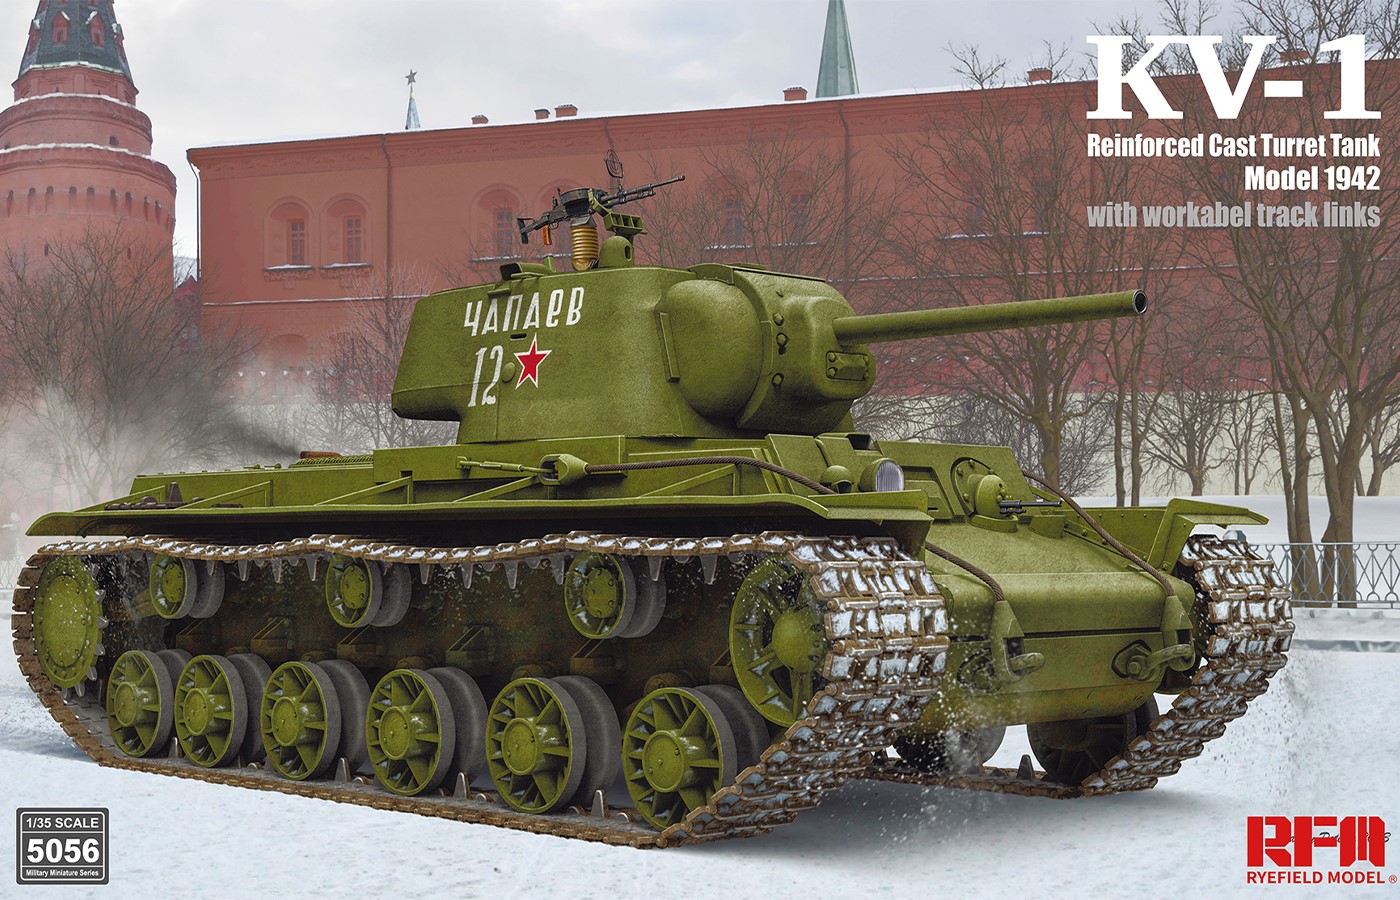 KV-1 Reinforced Cast Turret TankModel 1942